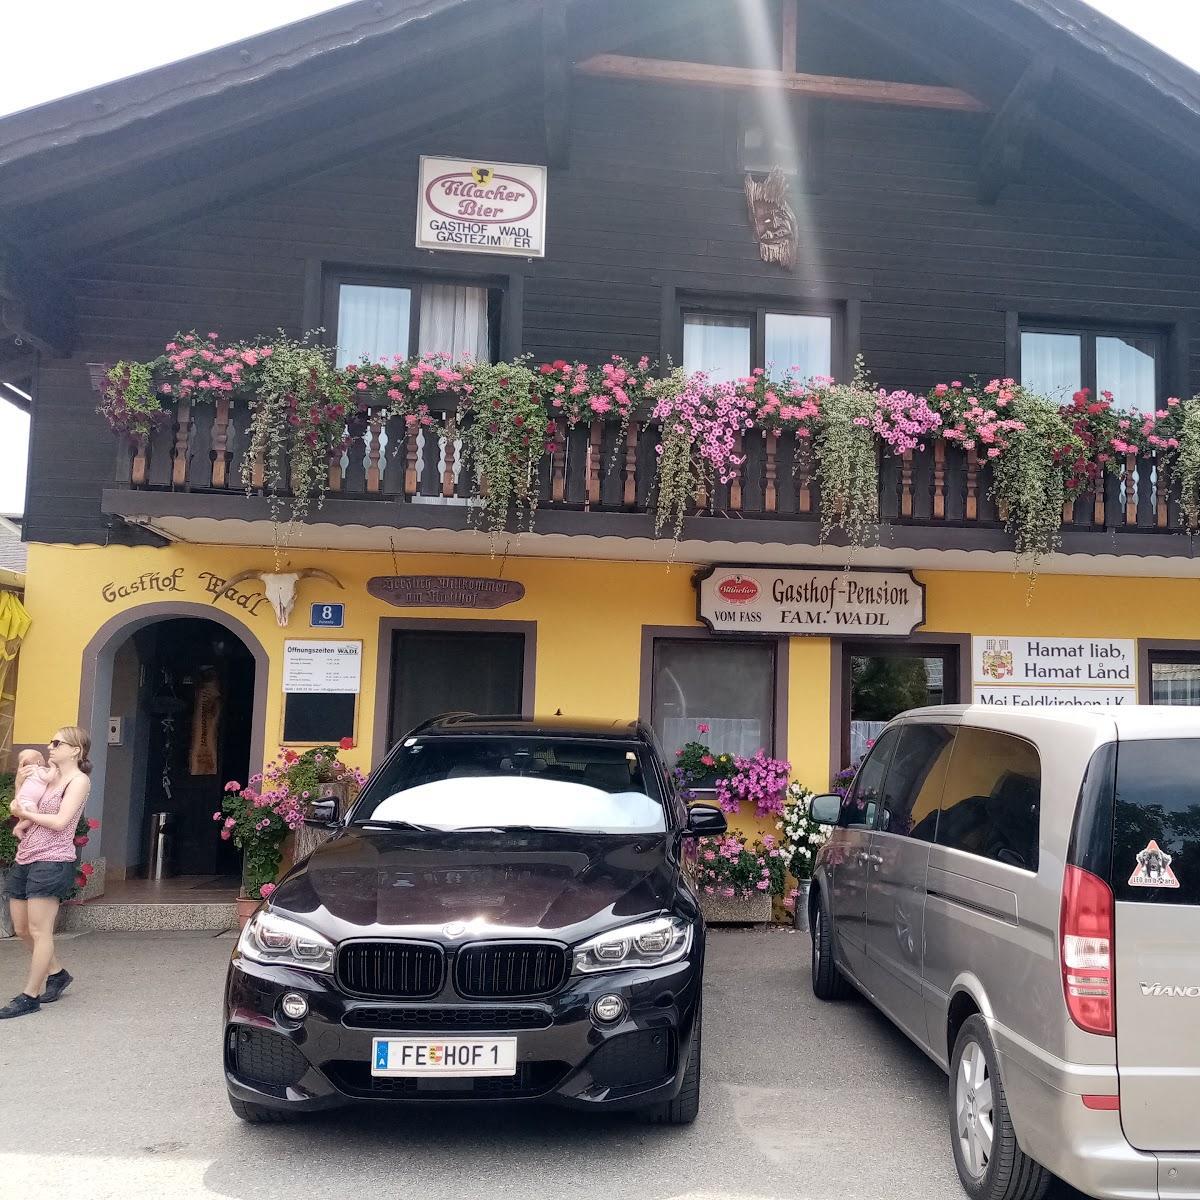 Restaurant "Gasthof Wadl" in Feldkirchen in Kärnten